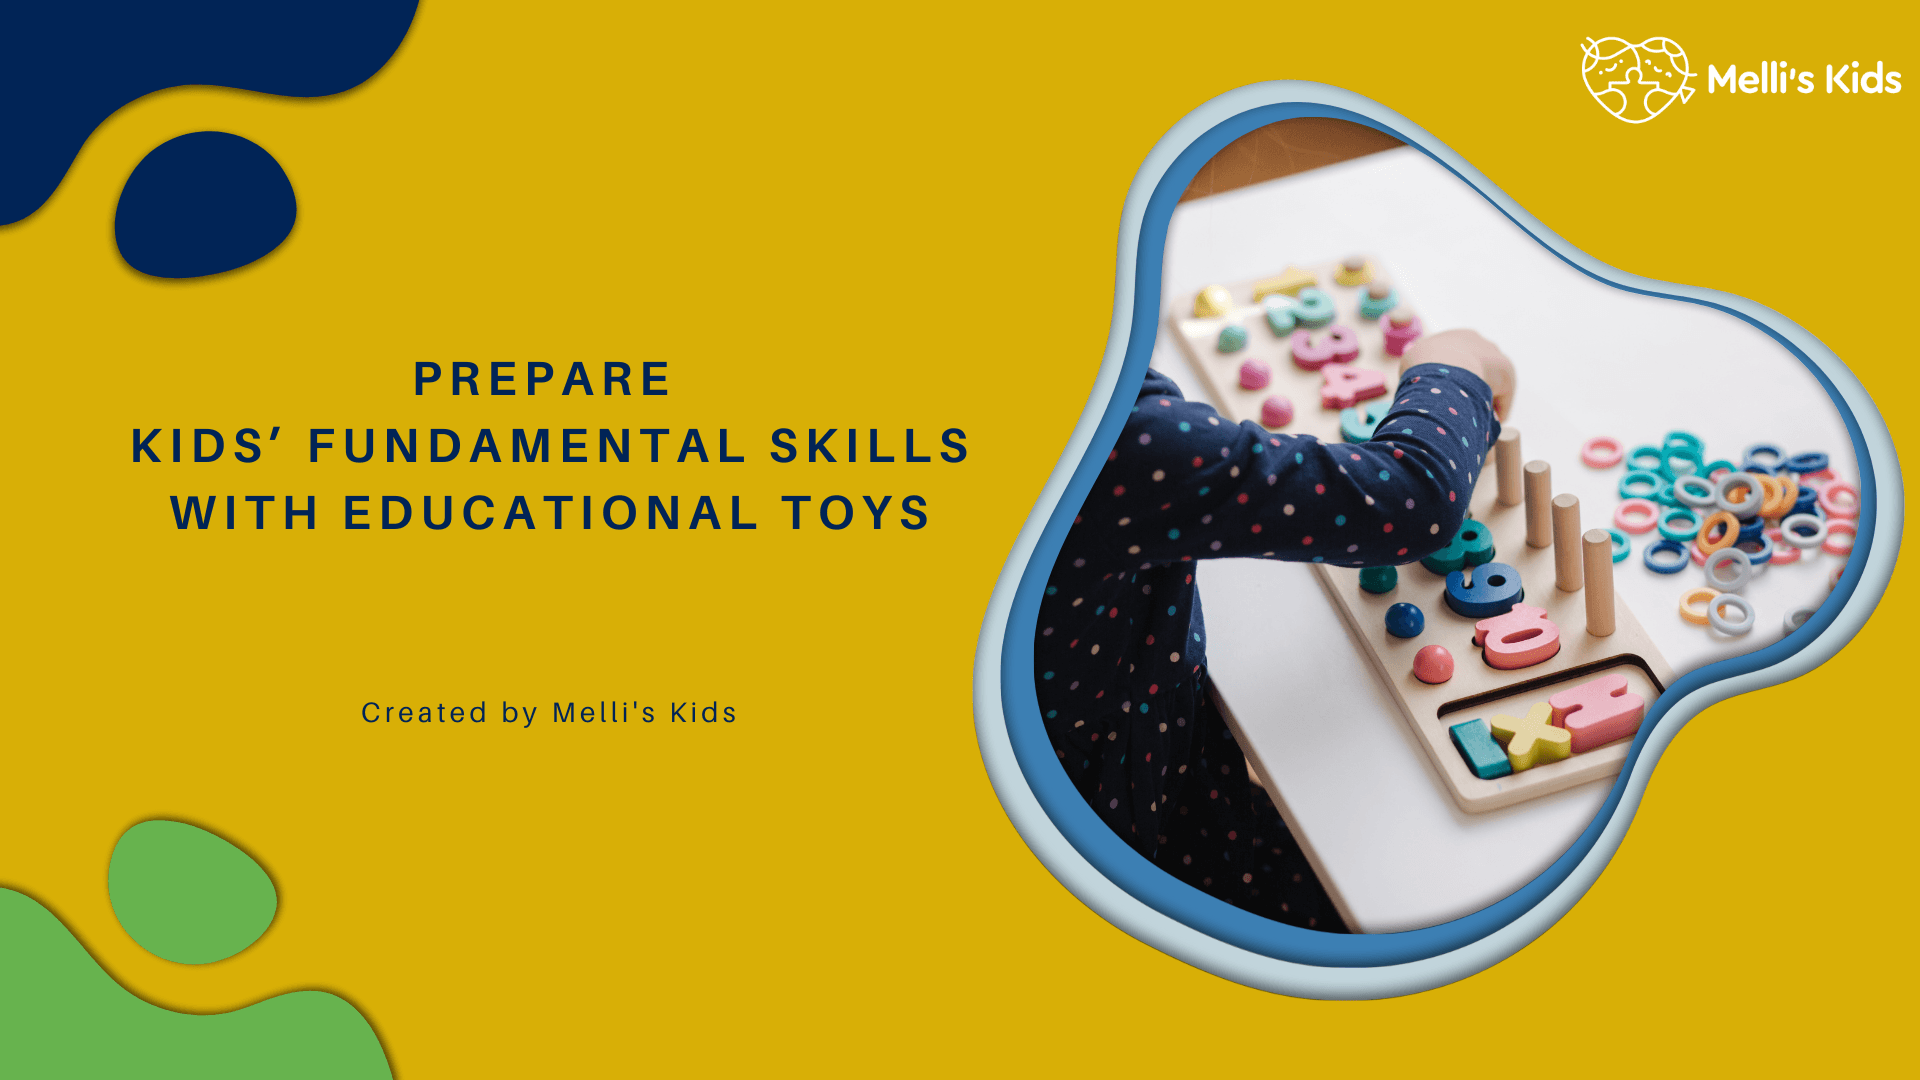 Prepare kids’ fundamental skills with educational toys - Melli's Kids